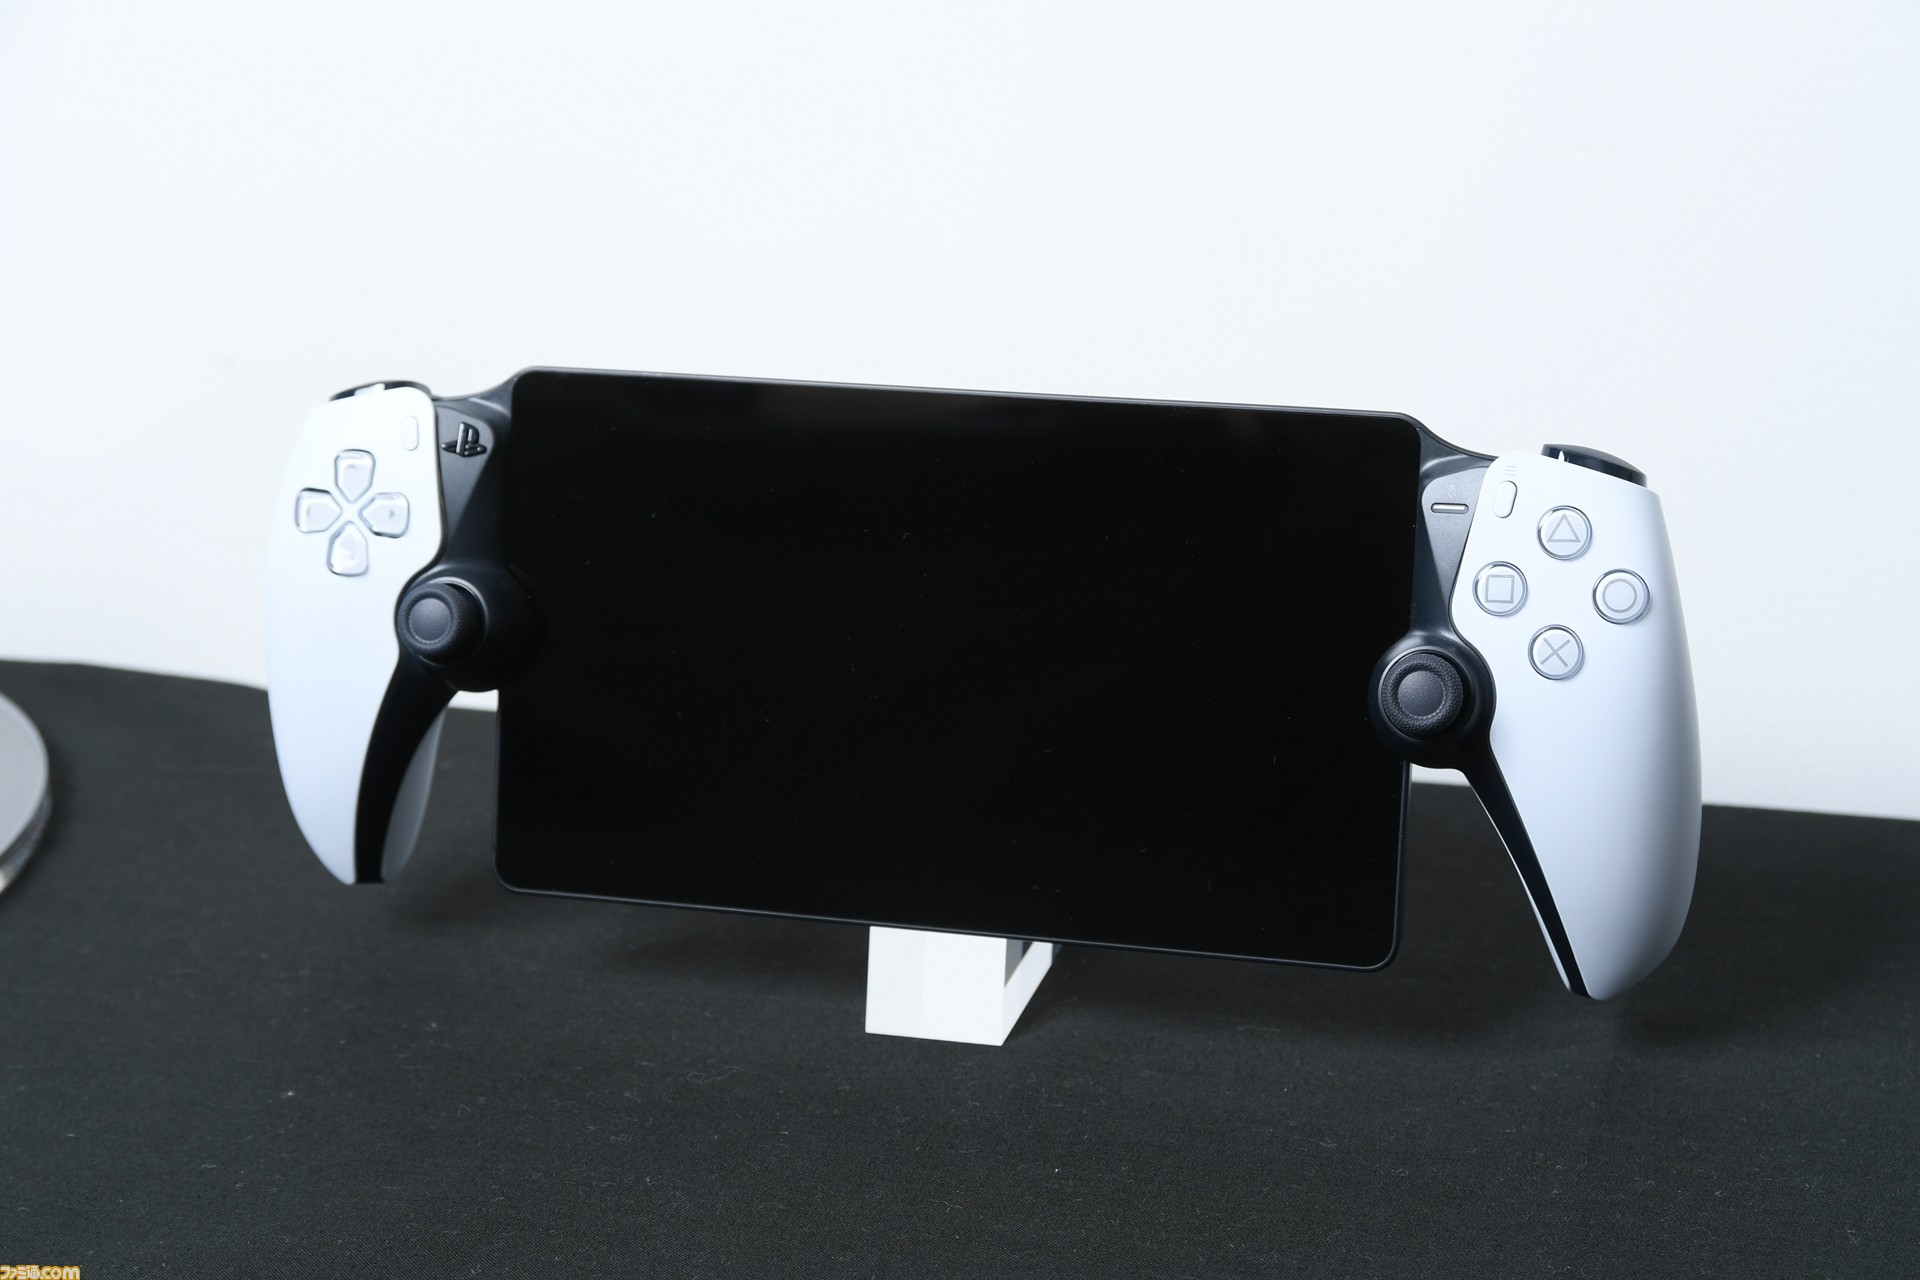 PS5リモート専用端末の正式名称が“PlayStation Portal リモートプレーヤー”に決定。価格は29980円[税込]で年内発売予定